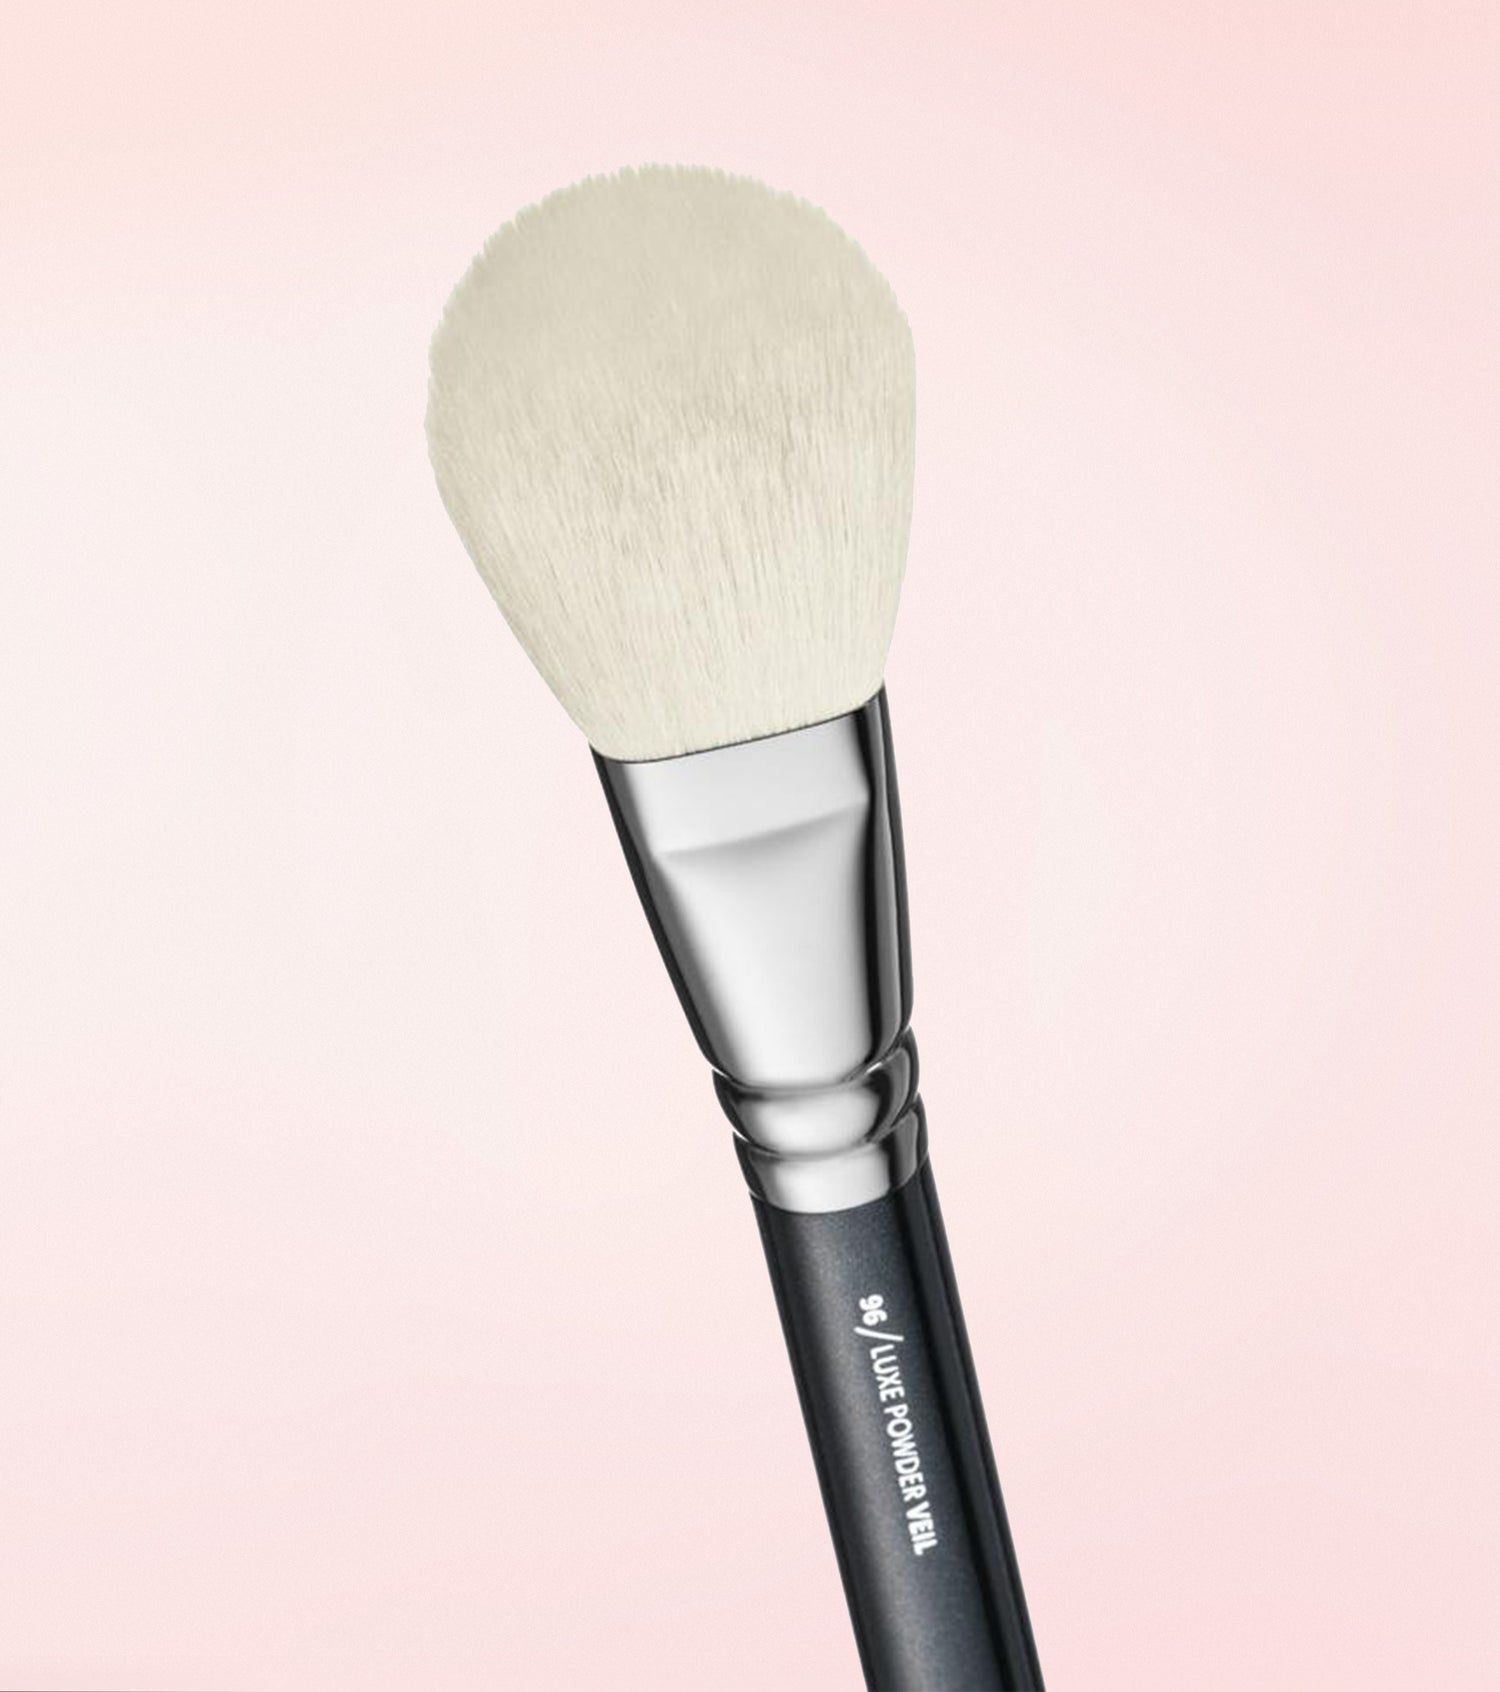 096 Luxe Powder Veil Brush Main Image featured